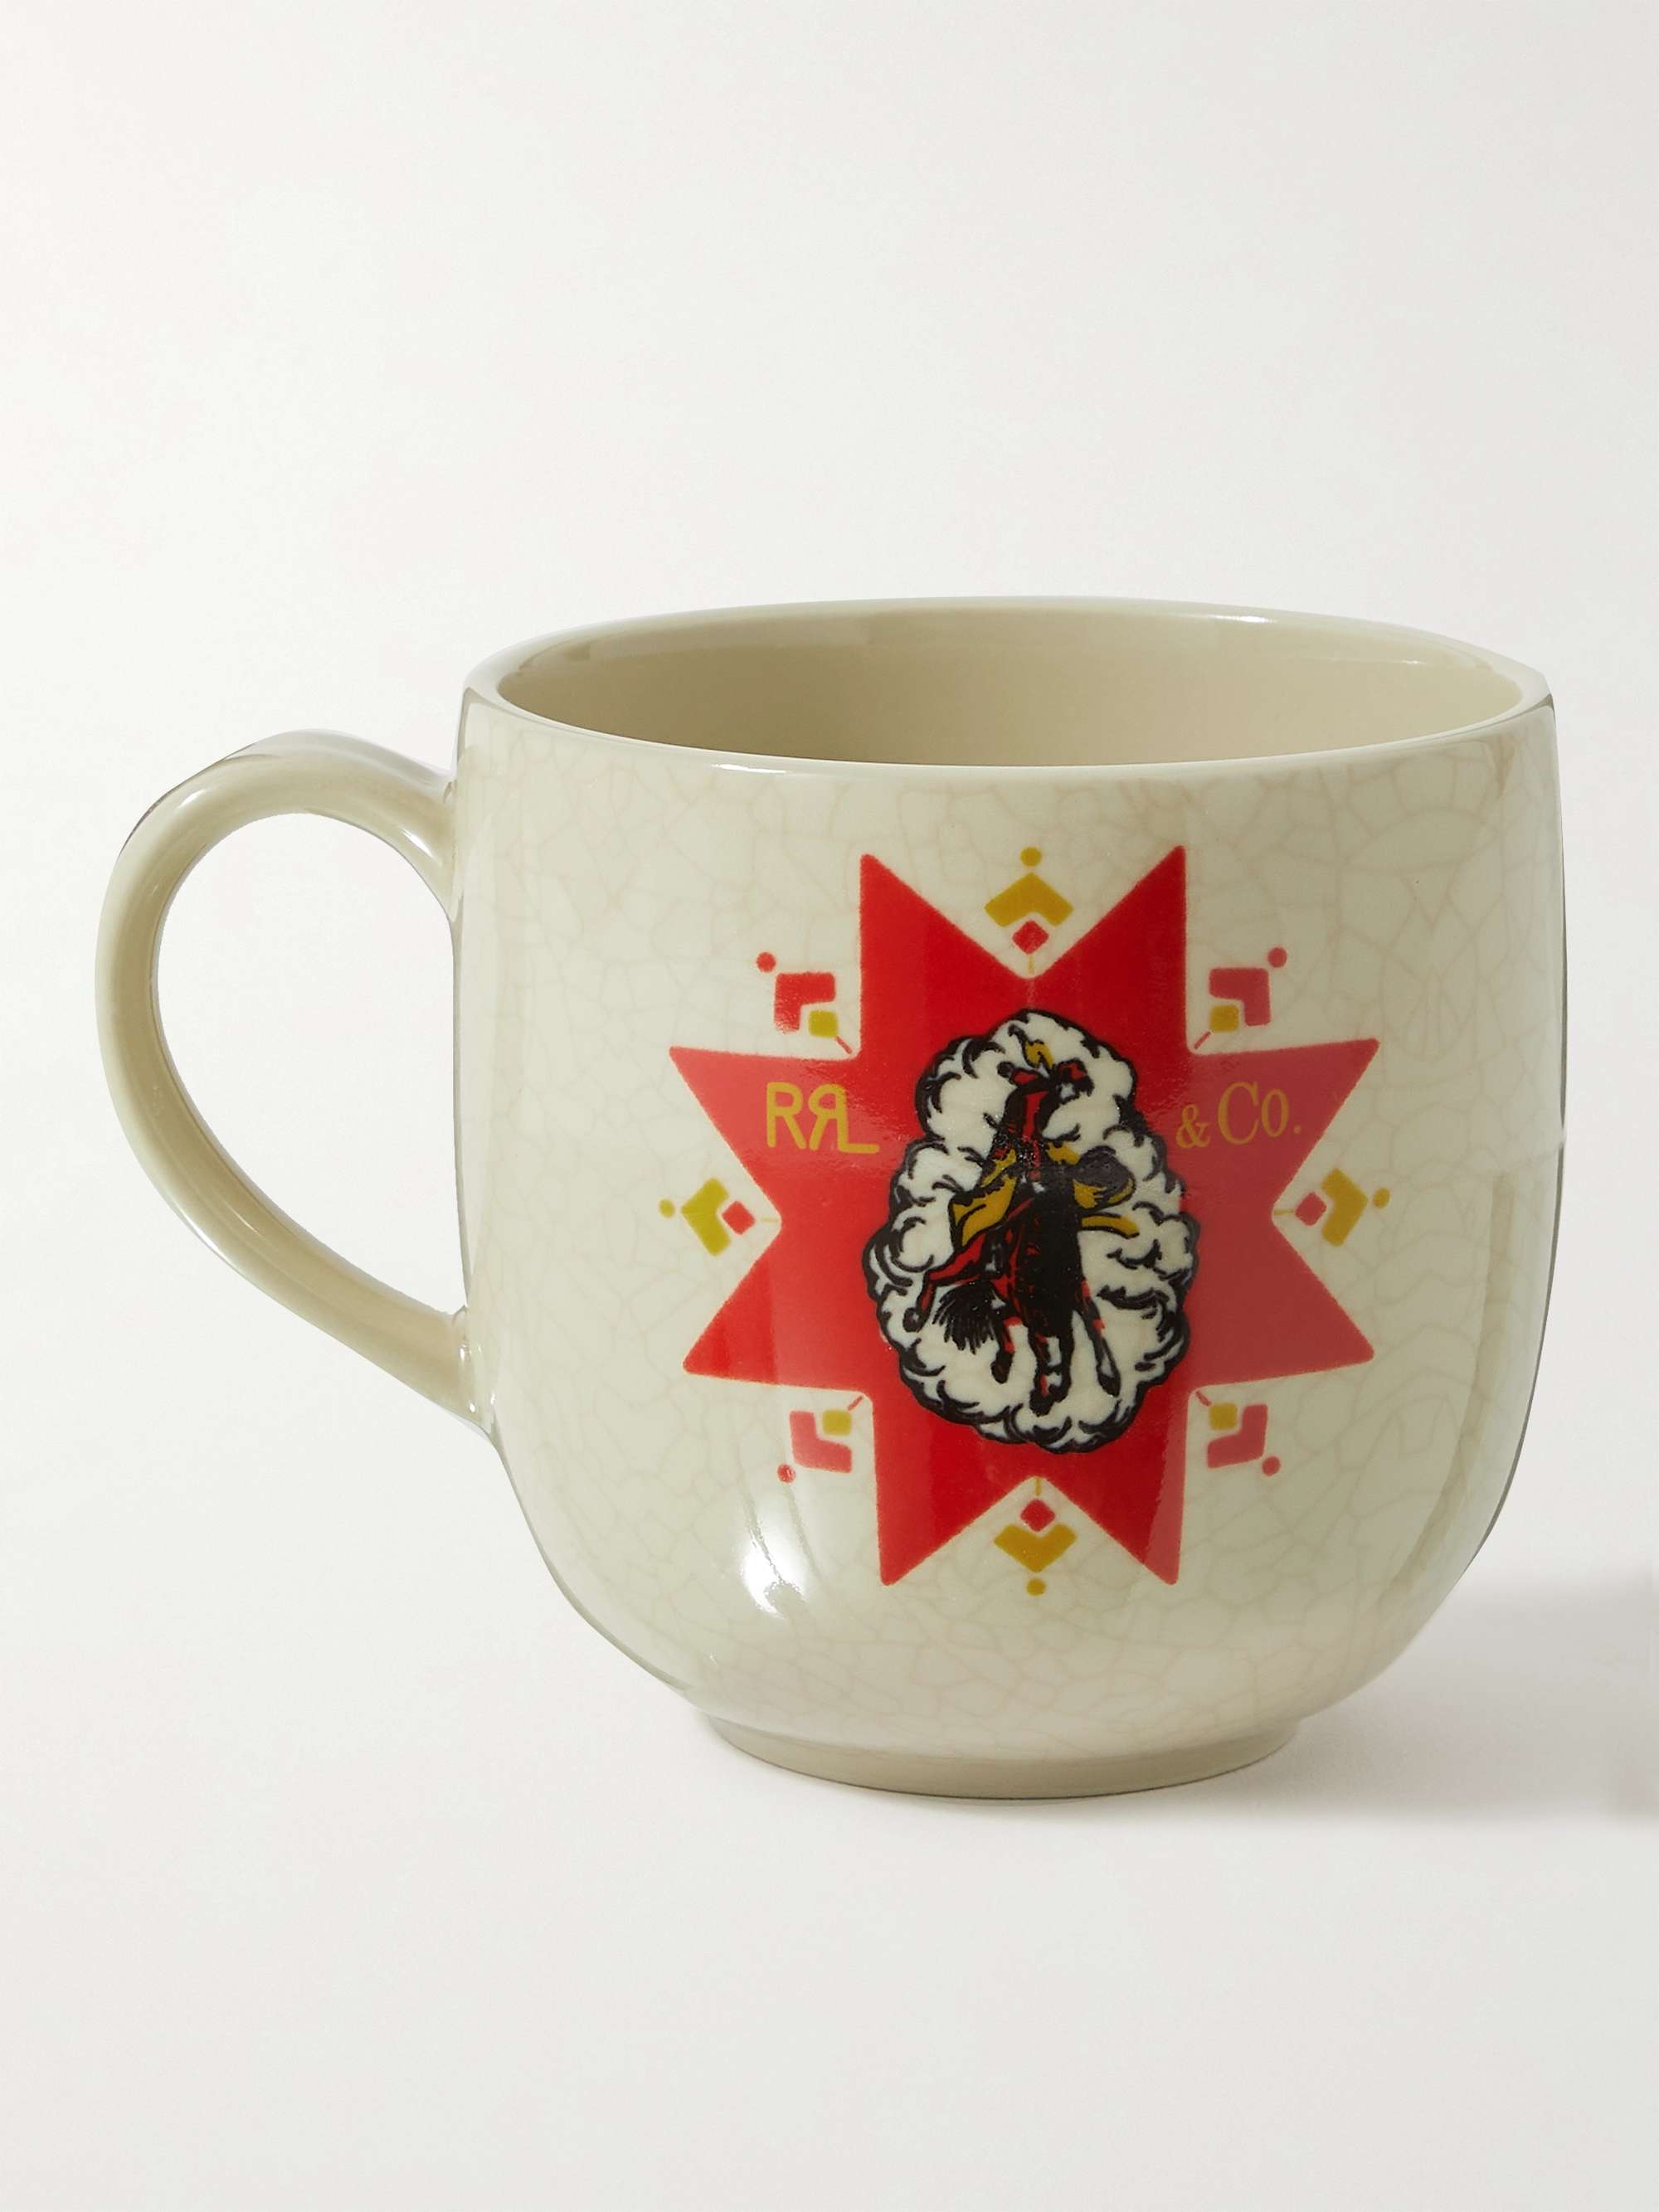 RRL Printed Ceramic Mug